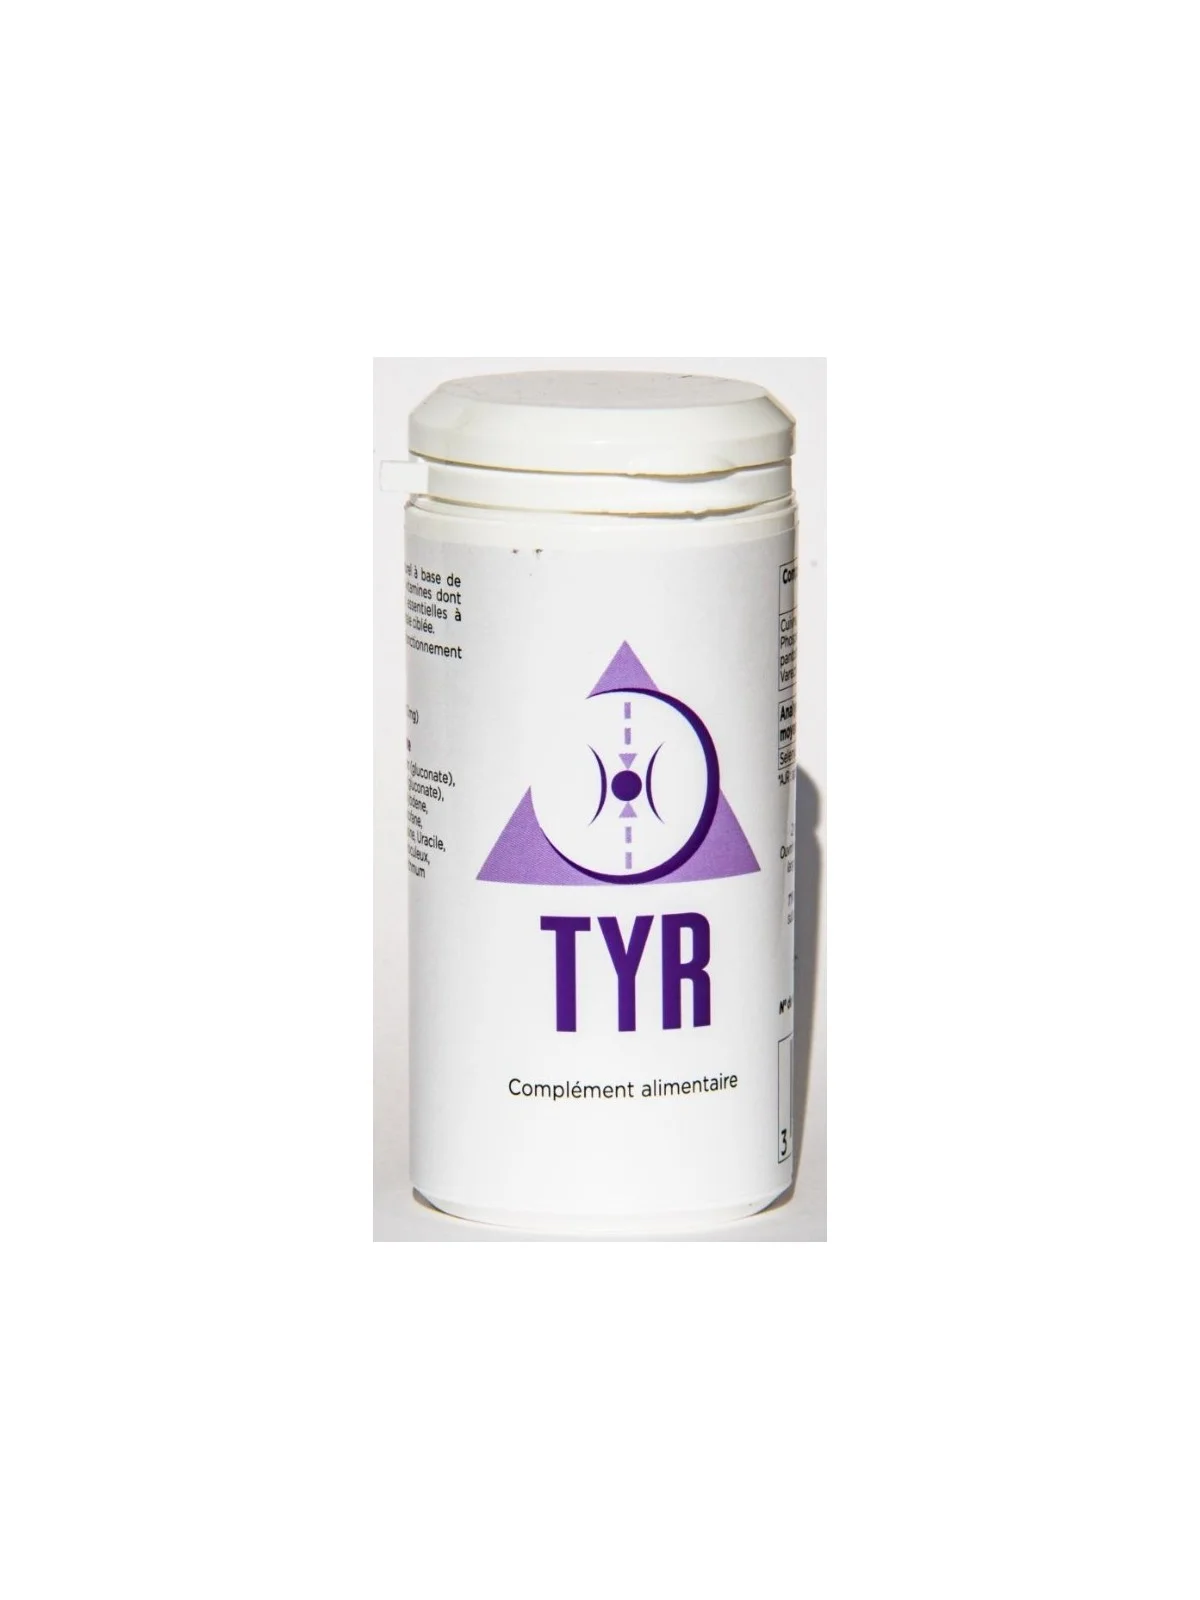 TYR fonction thyroïde 60 gel Labo MFM Nelson